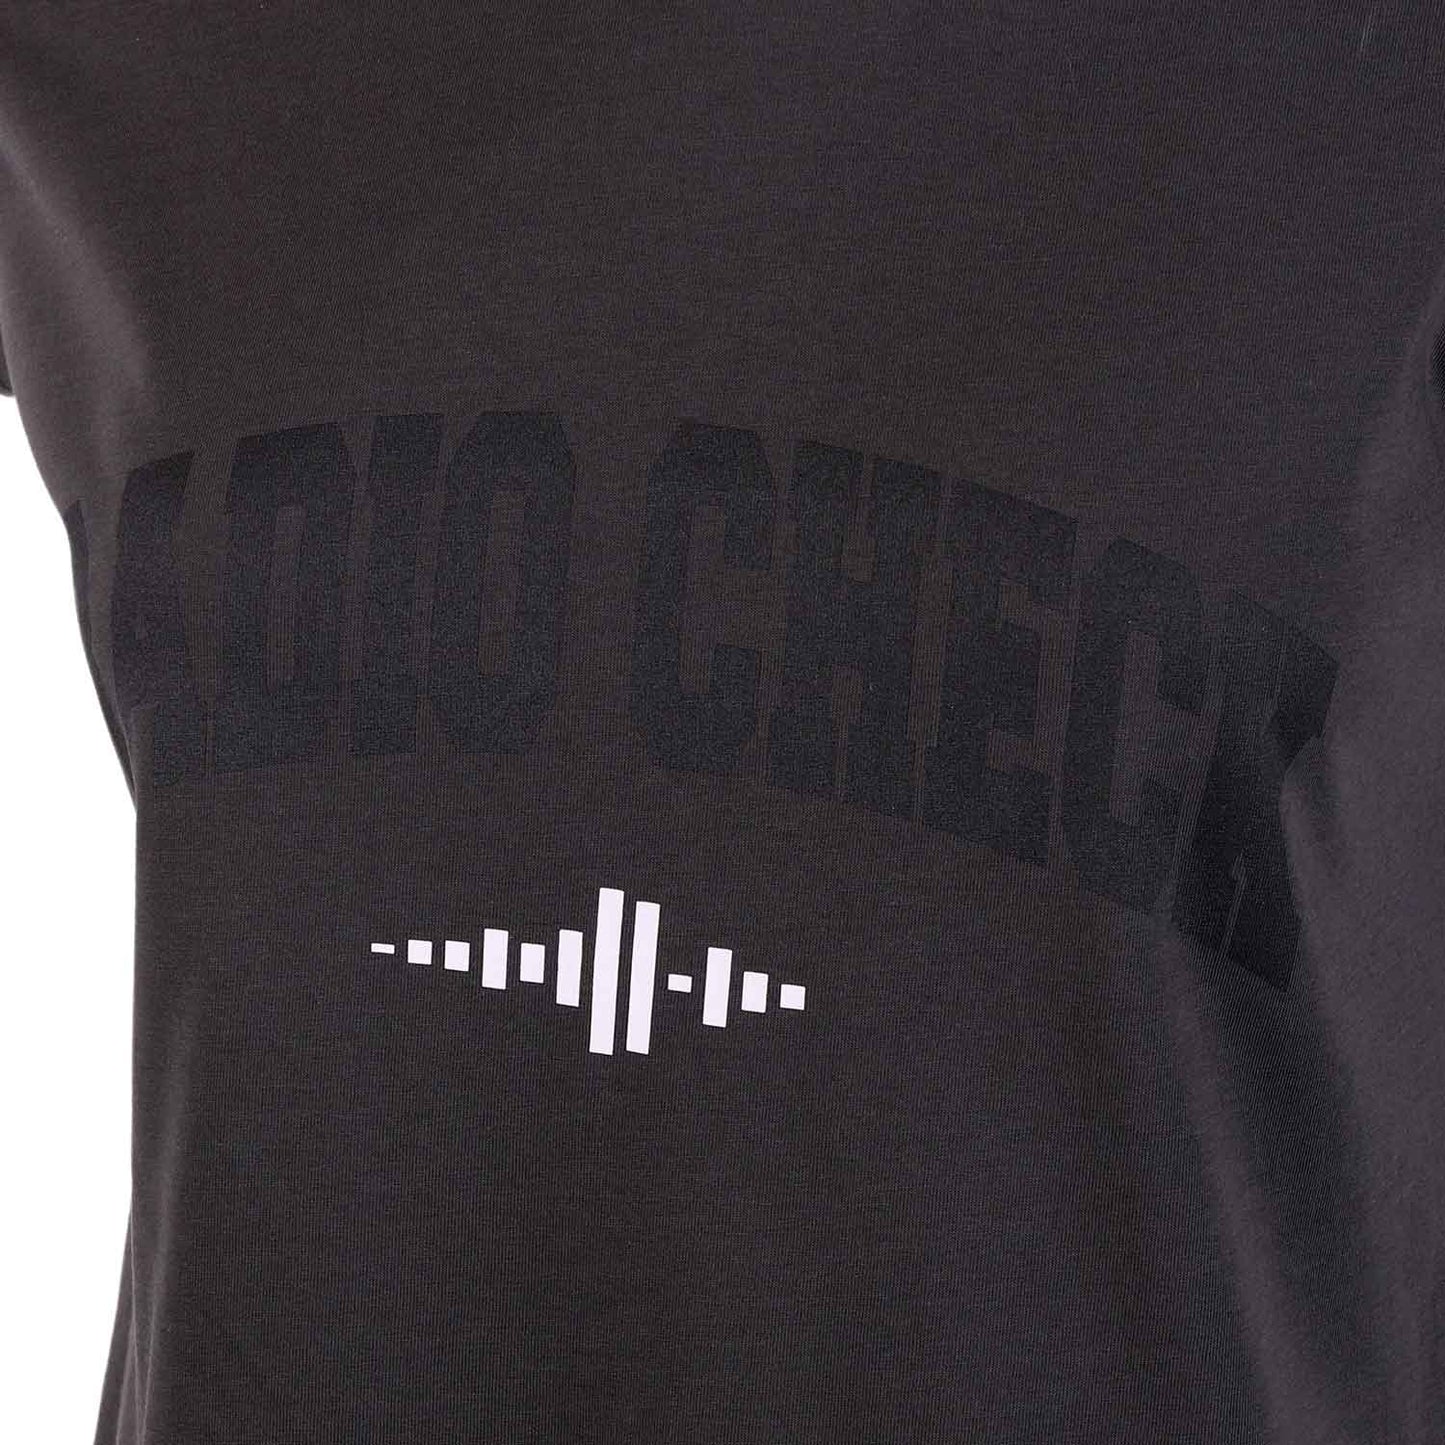 Woman T-shirt ‘Radio Check’